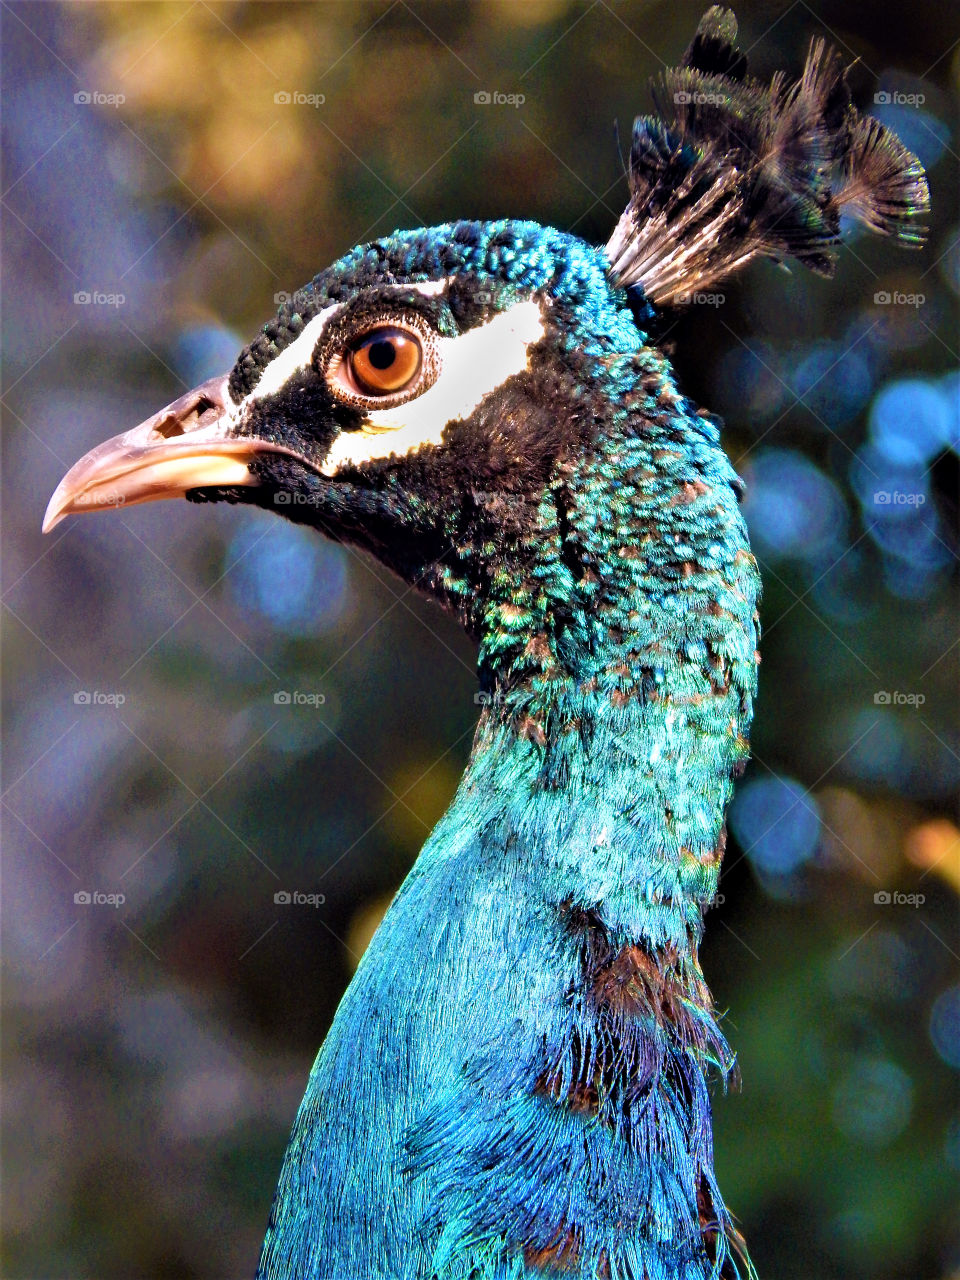 Peacock eye